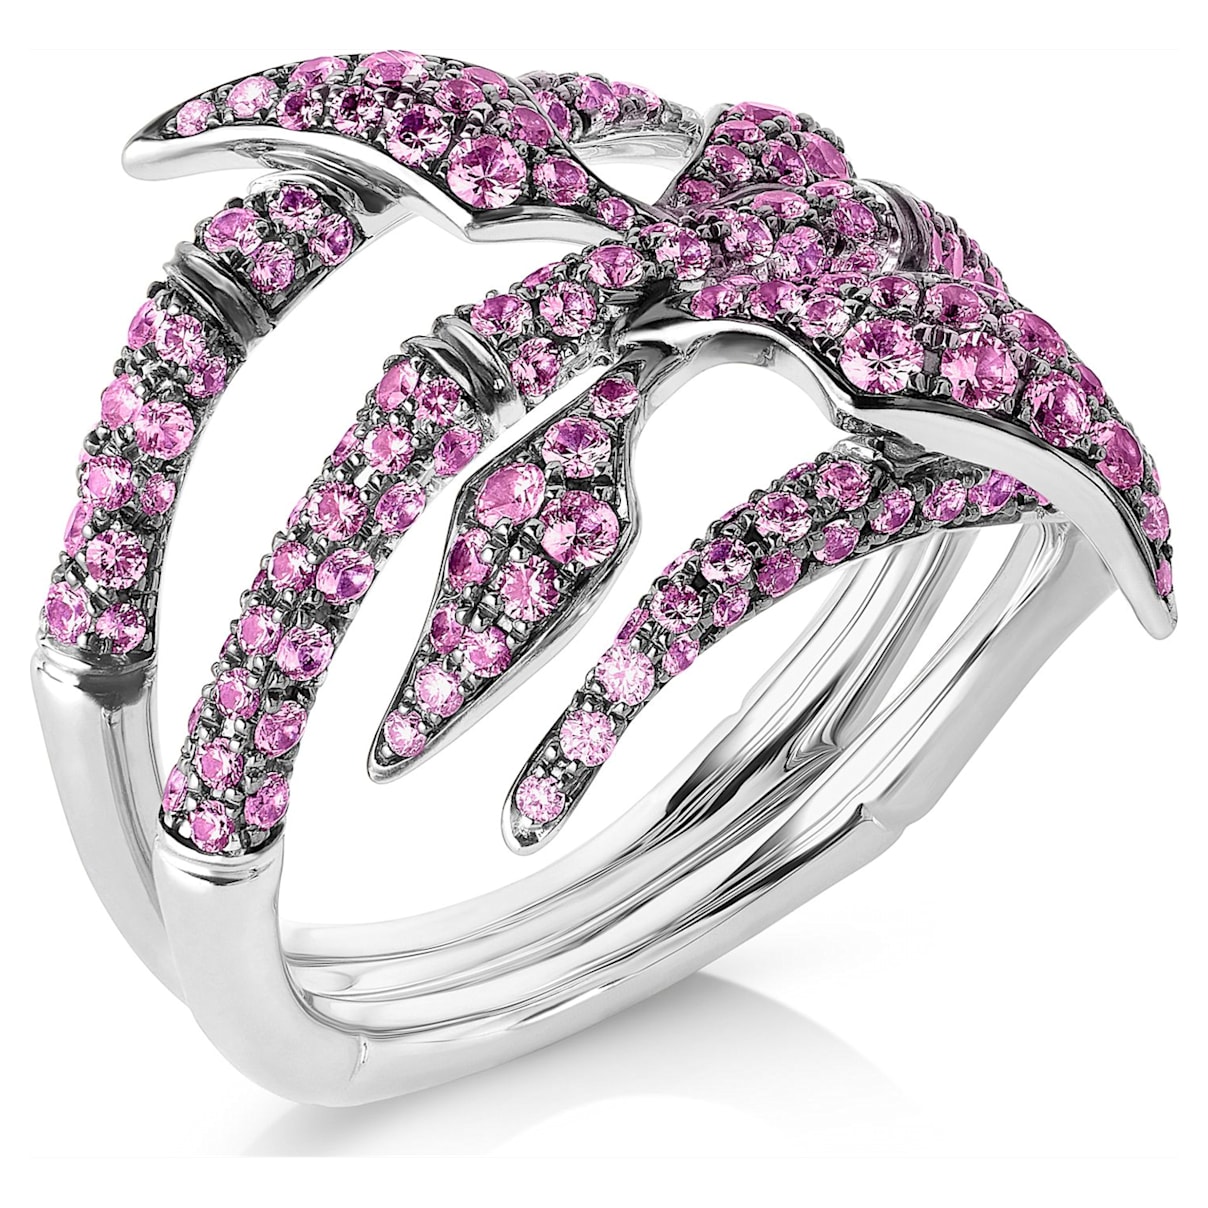 Bamboo Shoots Ring, Pink Swarovski Created Sapphires, 18K White Gold, Size 58